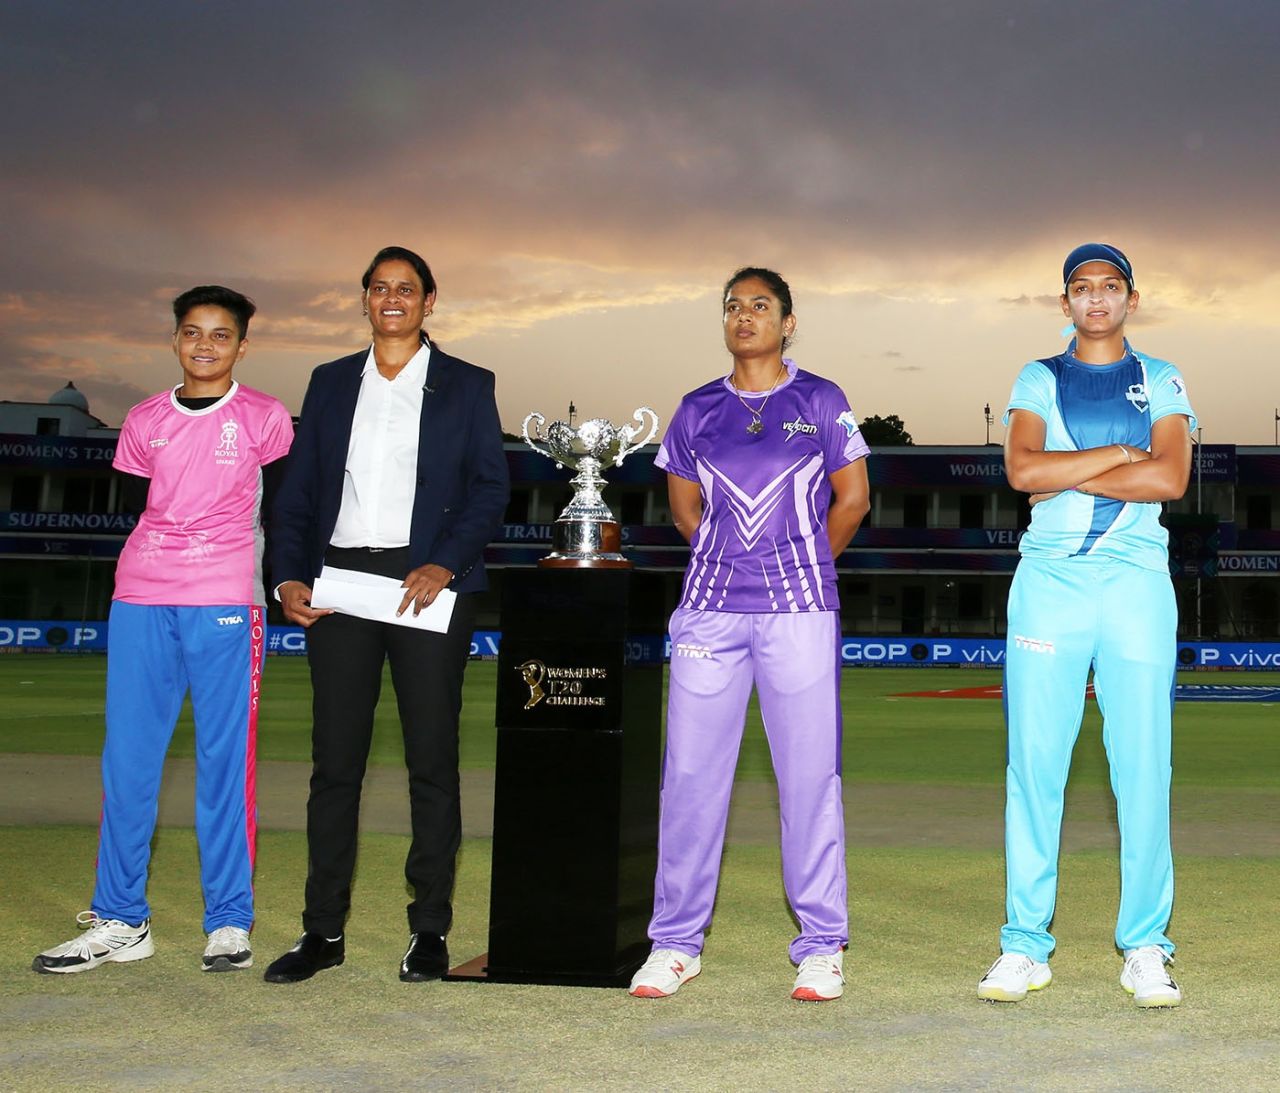 GS Lakshmi with captains Mithali Raj and Harmanpreet Kaur ahead of the final, Supernovas v Velocity, Women's T20 challenge final